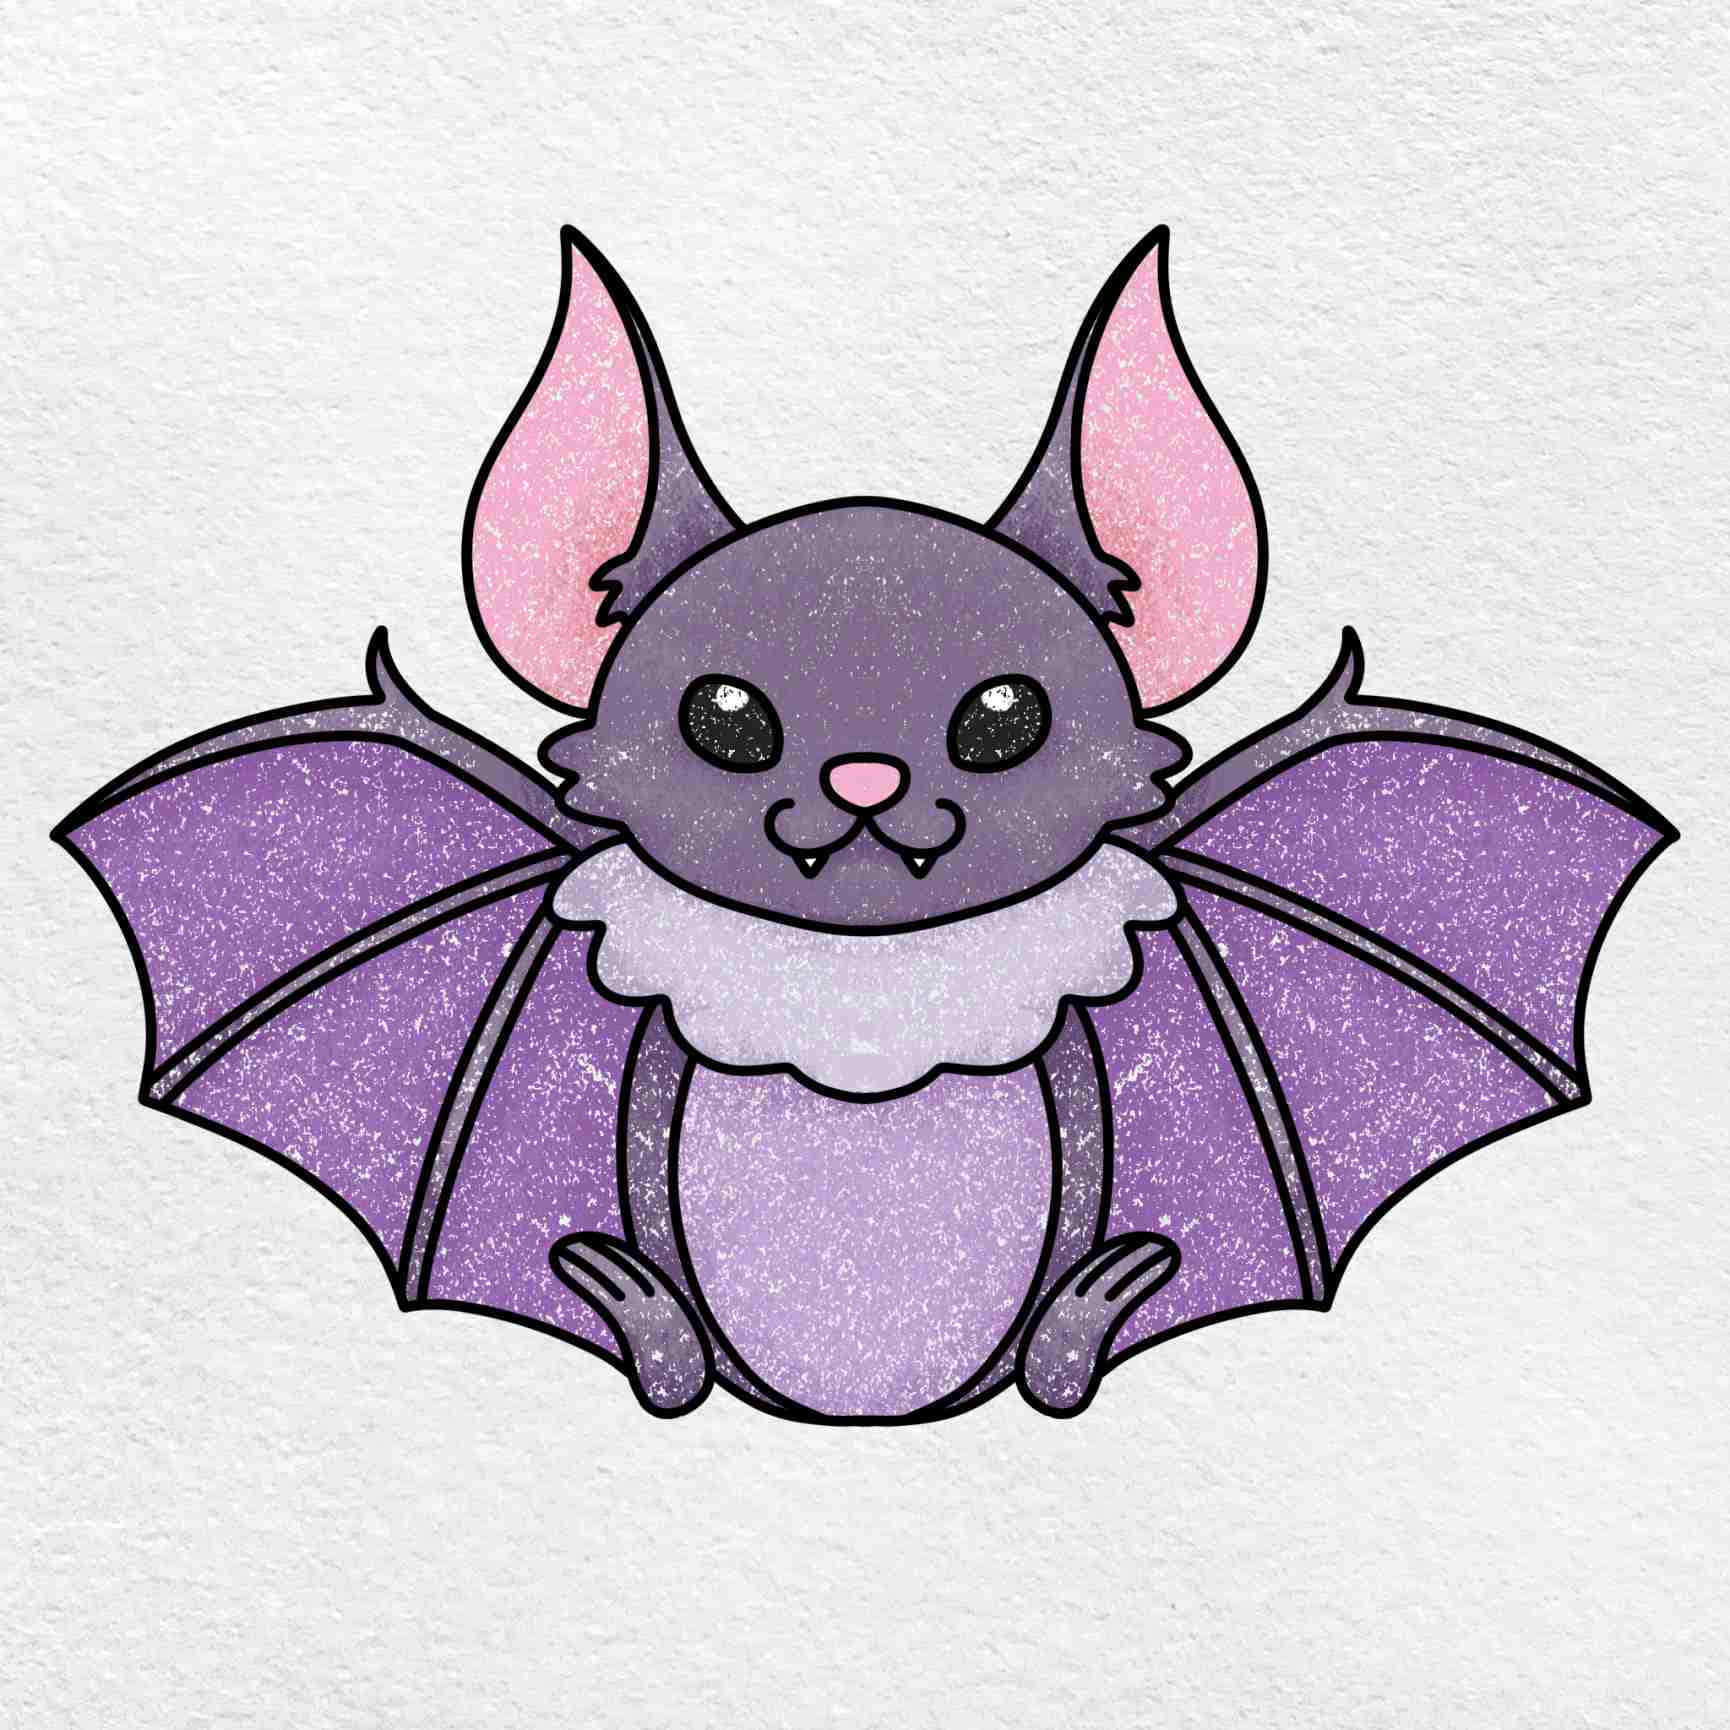 Bat - Drawing Skill